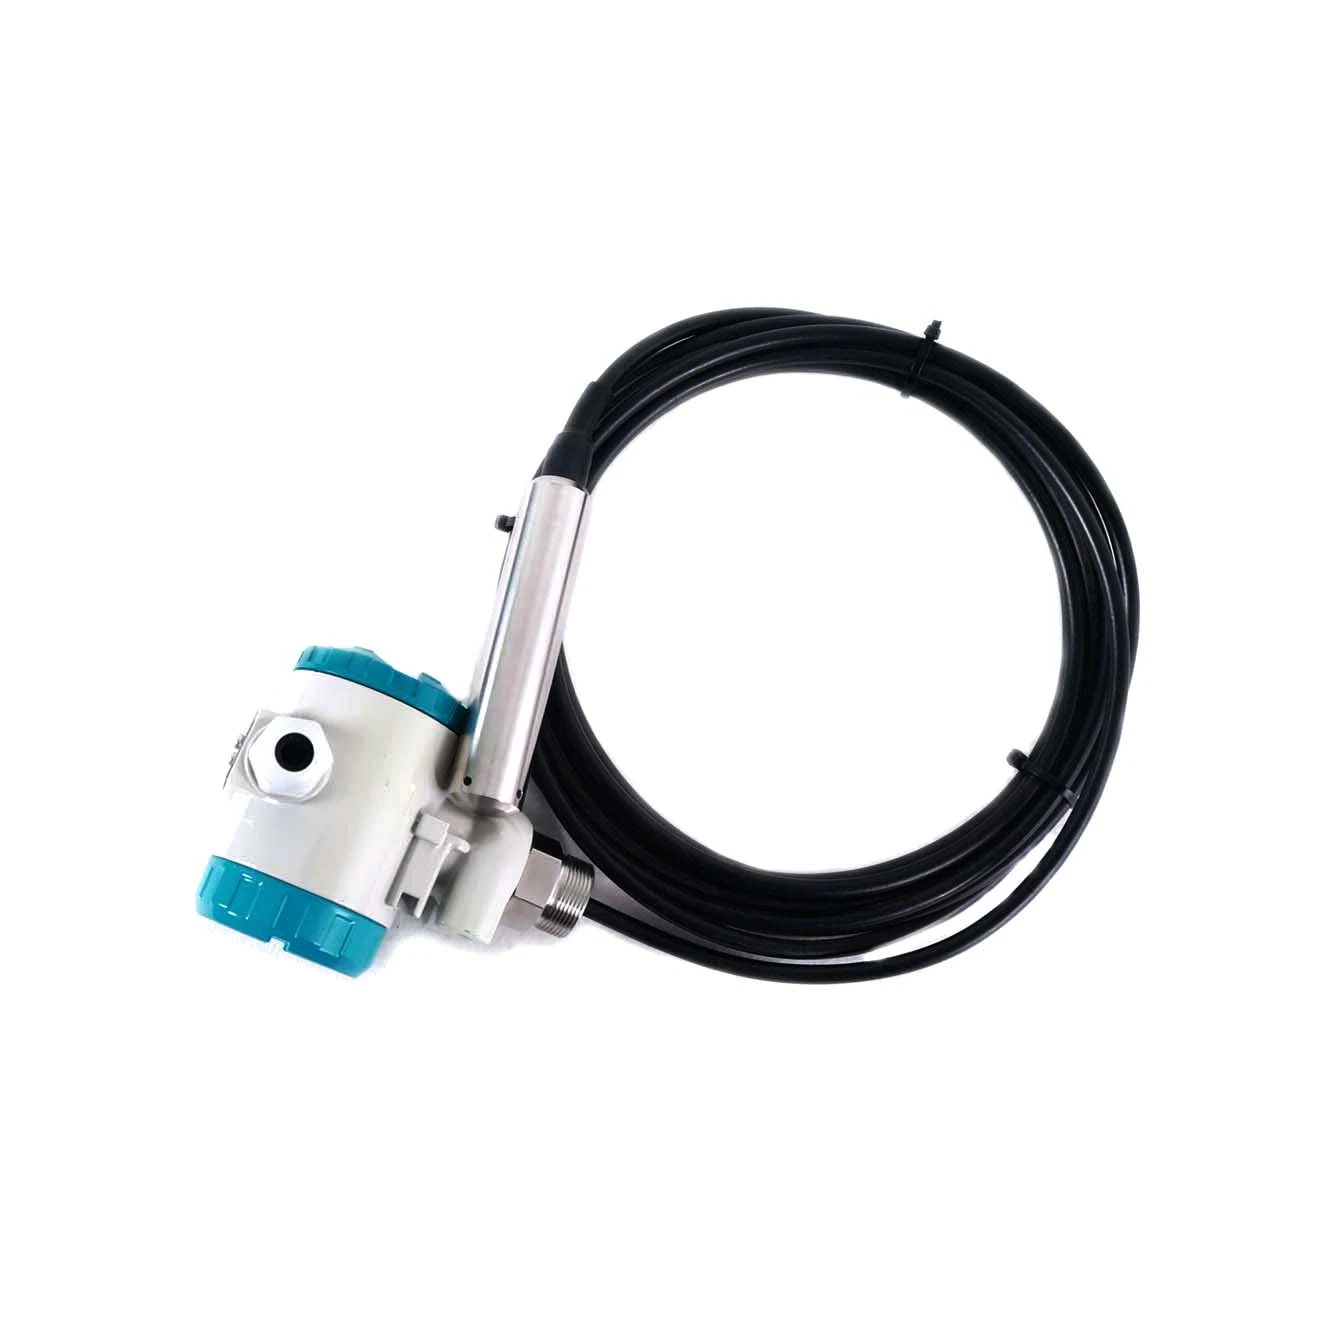 Qyb201 Hydrostatic Liquid Water Level Sensor Transmitter Instrument for Deep Wells/Diving Level 0-200m 4-20mA